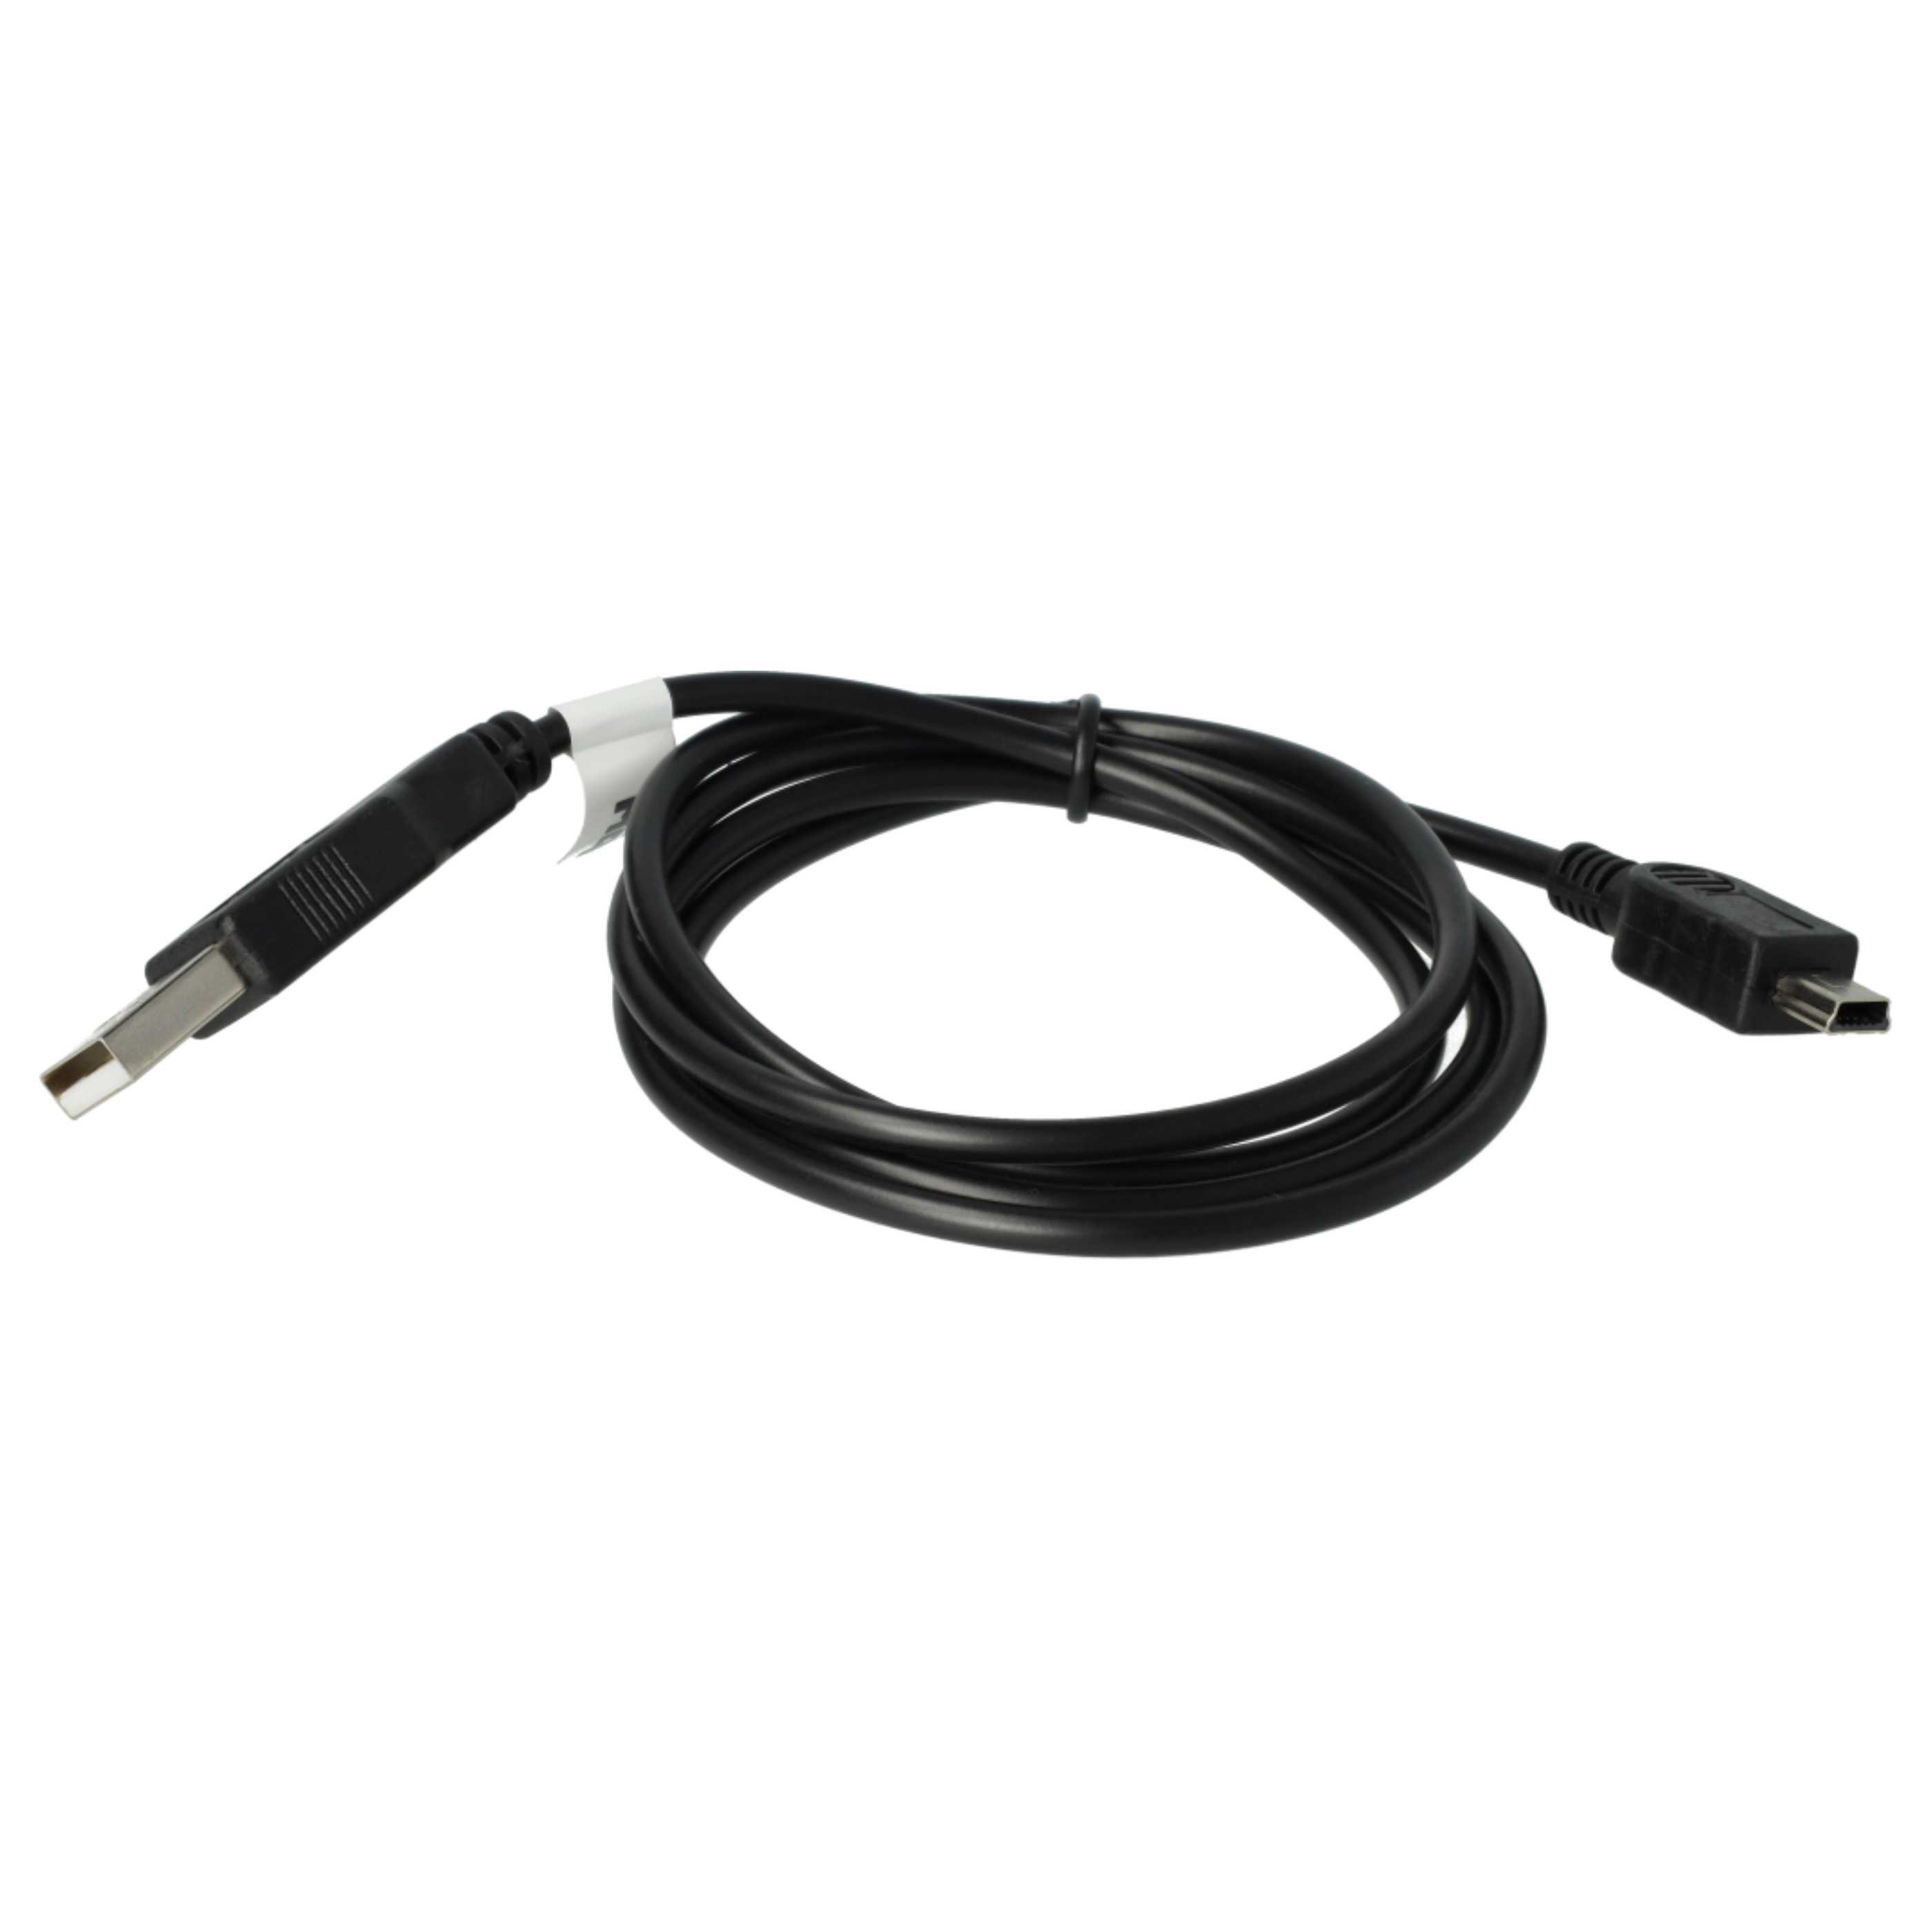 vhbw USB Kabel Spielekonsole - 2in1 Datenkabel / Ladekabel 1m Lang 100cm Lang